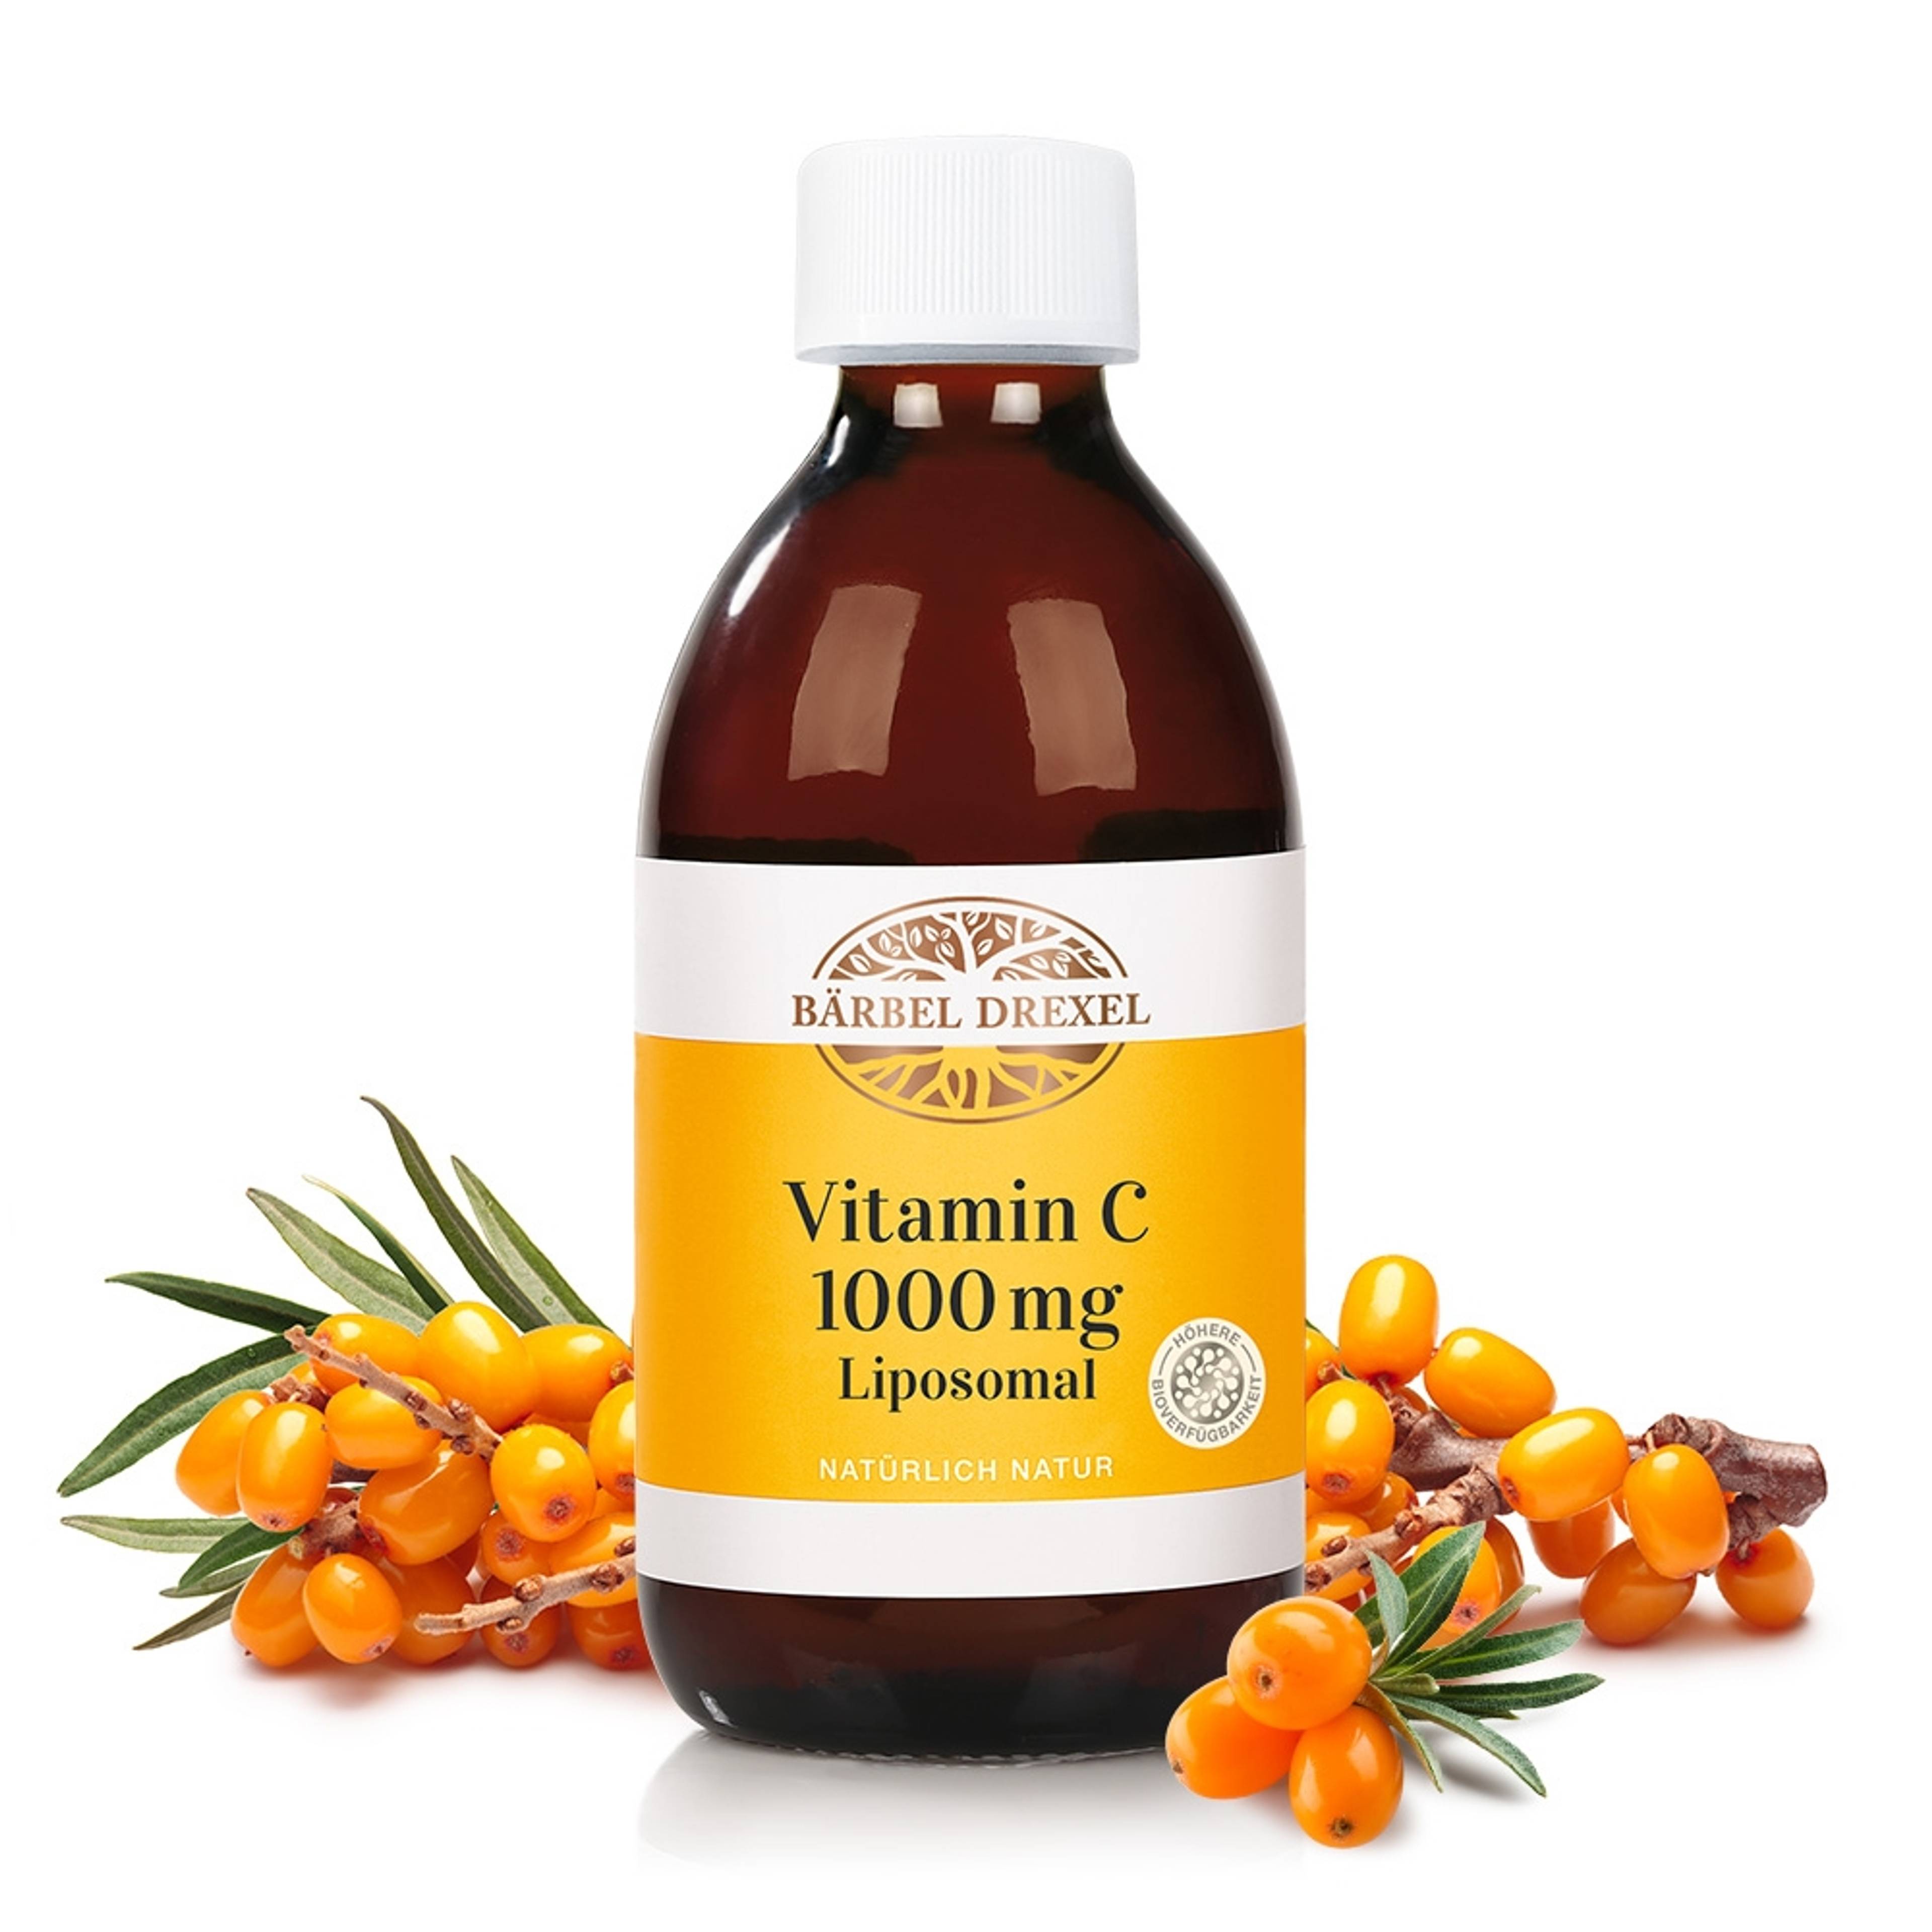 Vitamin C 1000 mg liposomal